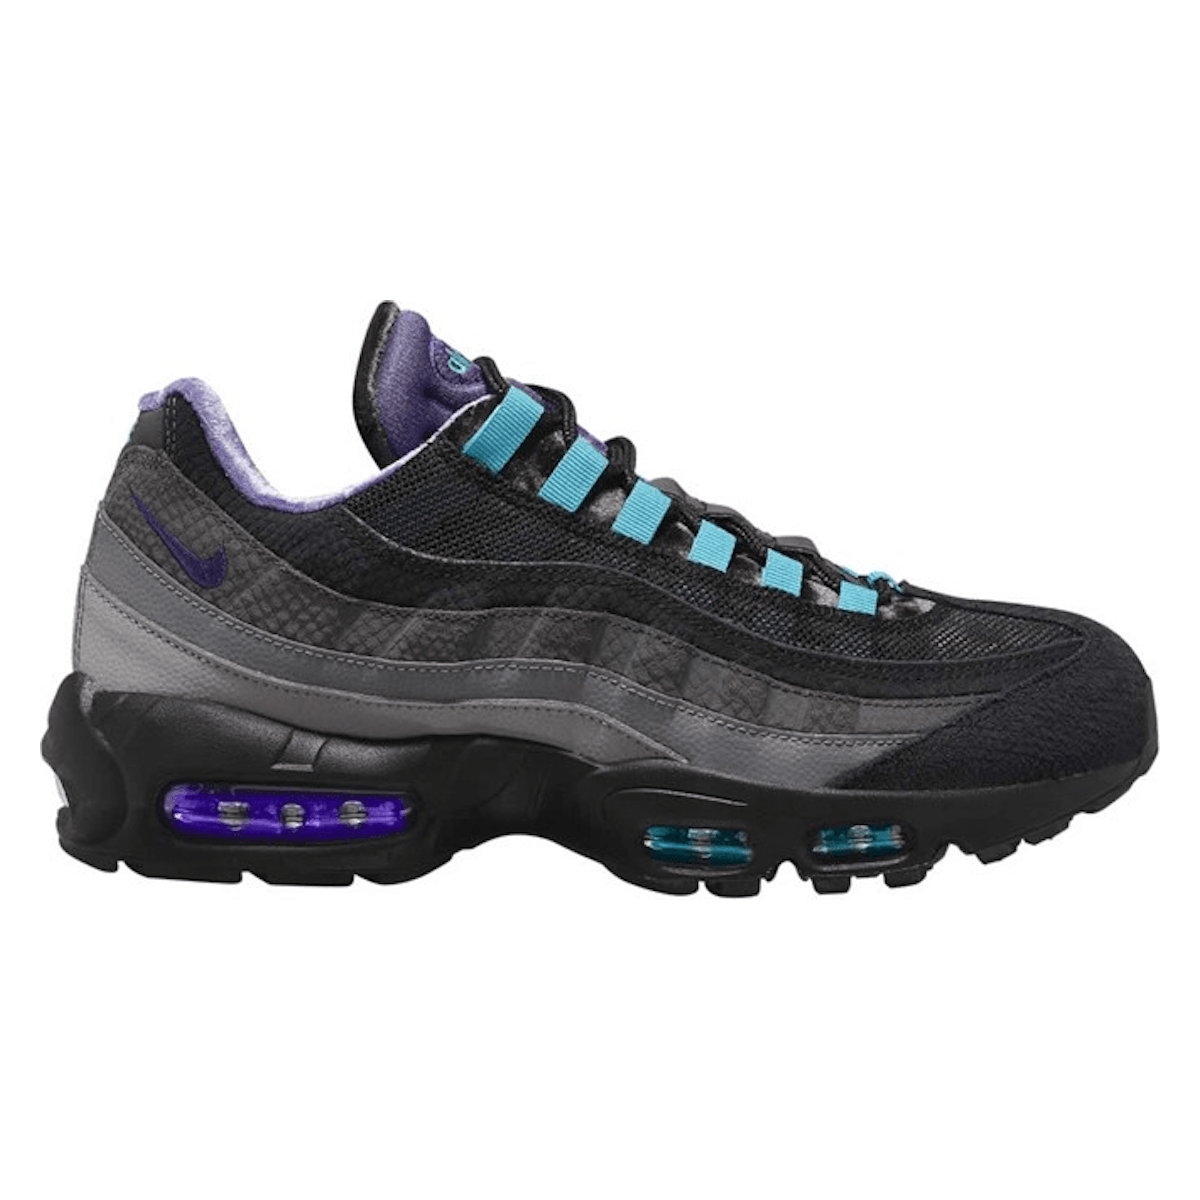 Nike Air Max 95 LV8 "Black/Court Purple"